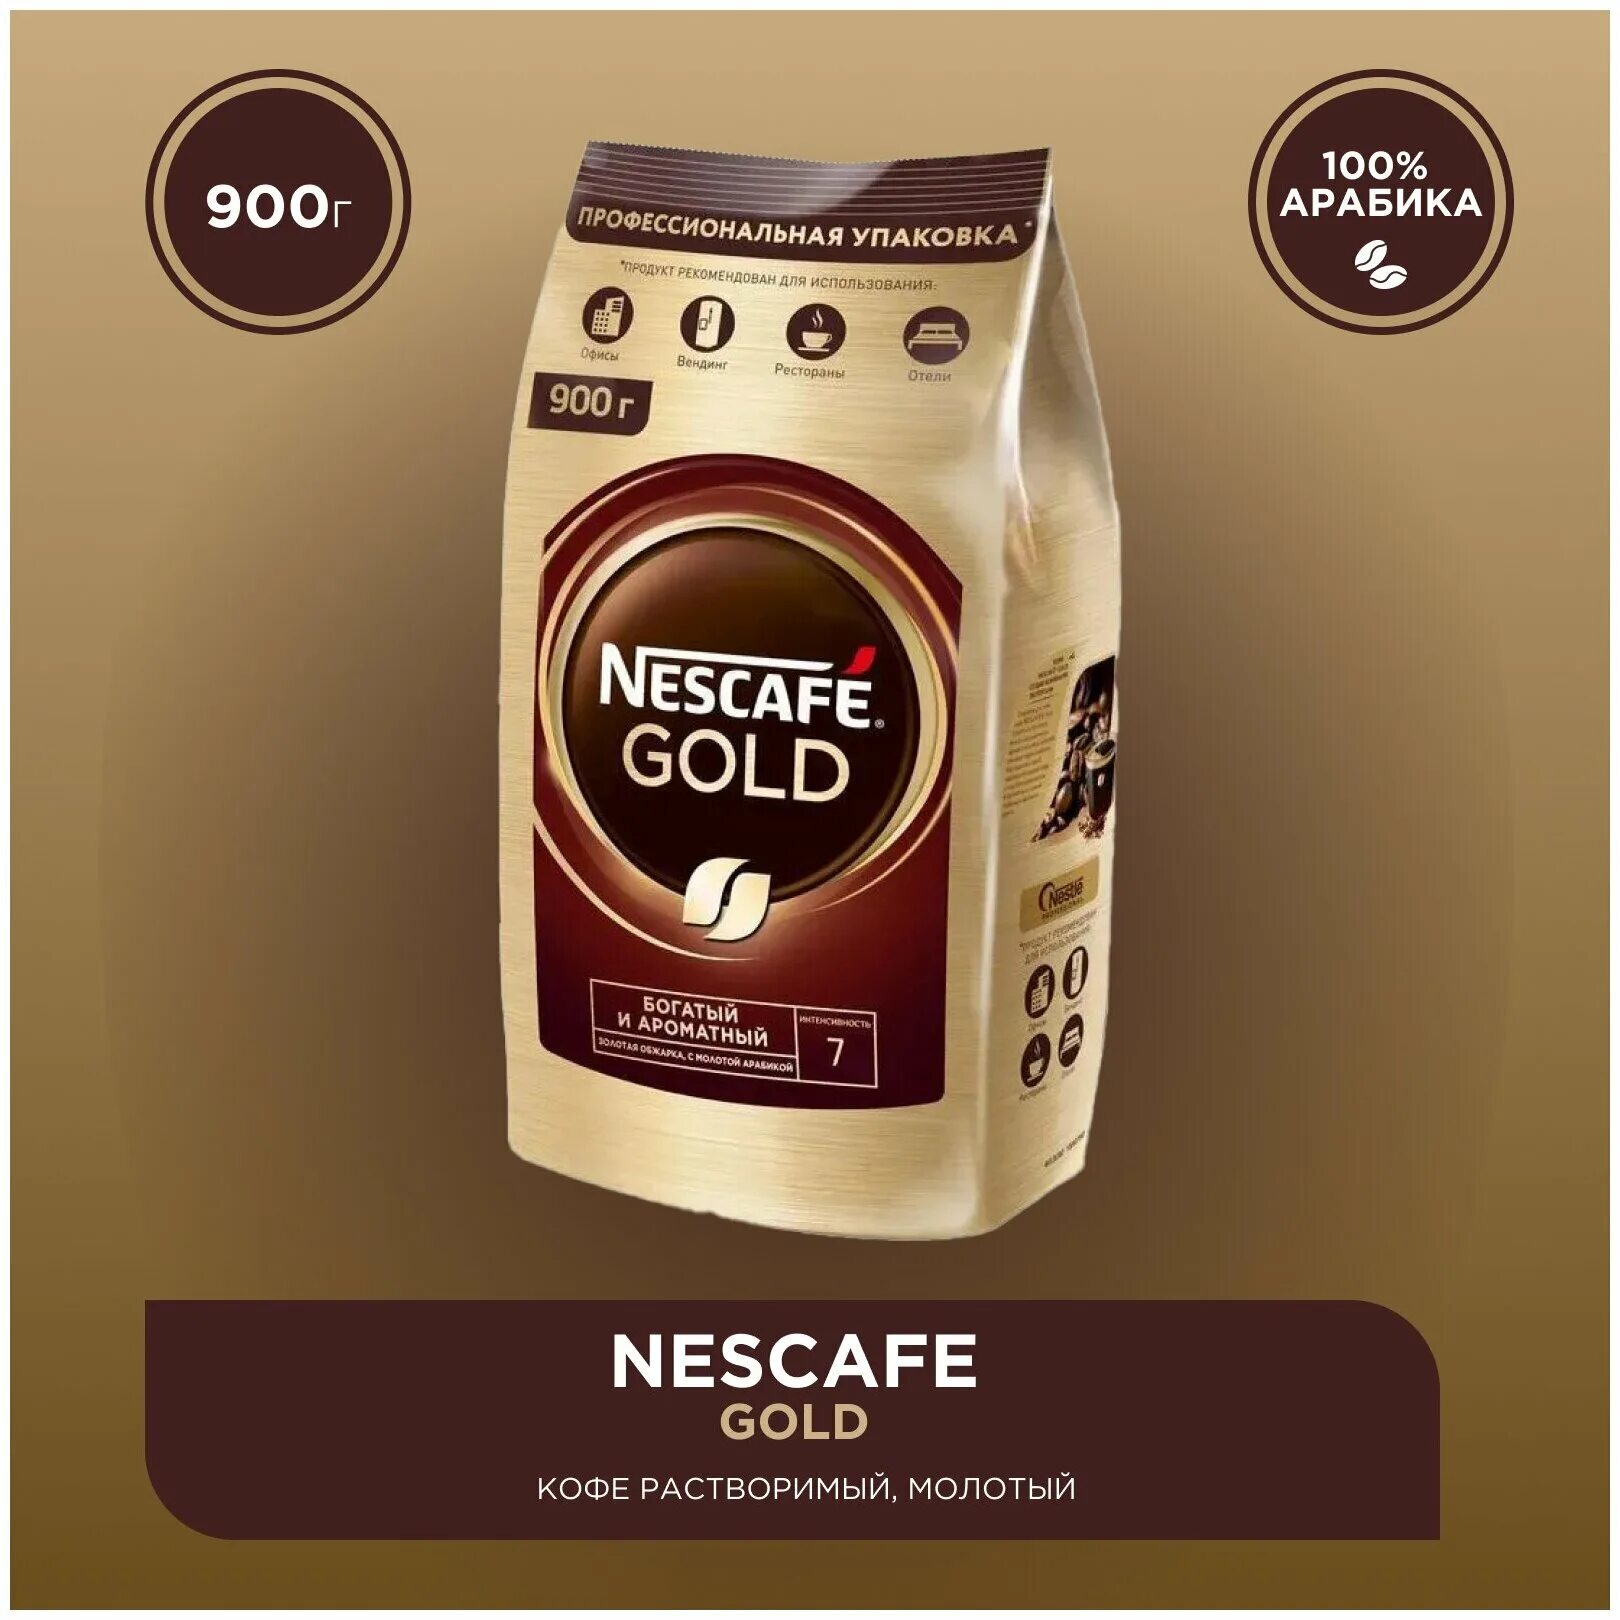 Кофе nescafe gold 900 г. Кофе Нескафе Голд 750 гр. Nescafe Gold 900. Кофе растворимый Nescafe Gold 750 г. Нескафе Голд 900 гр.